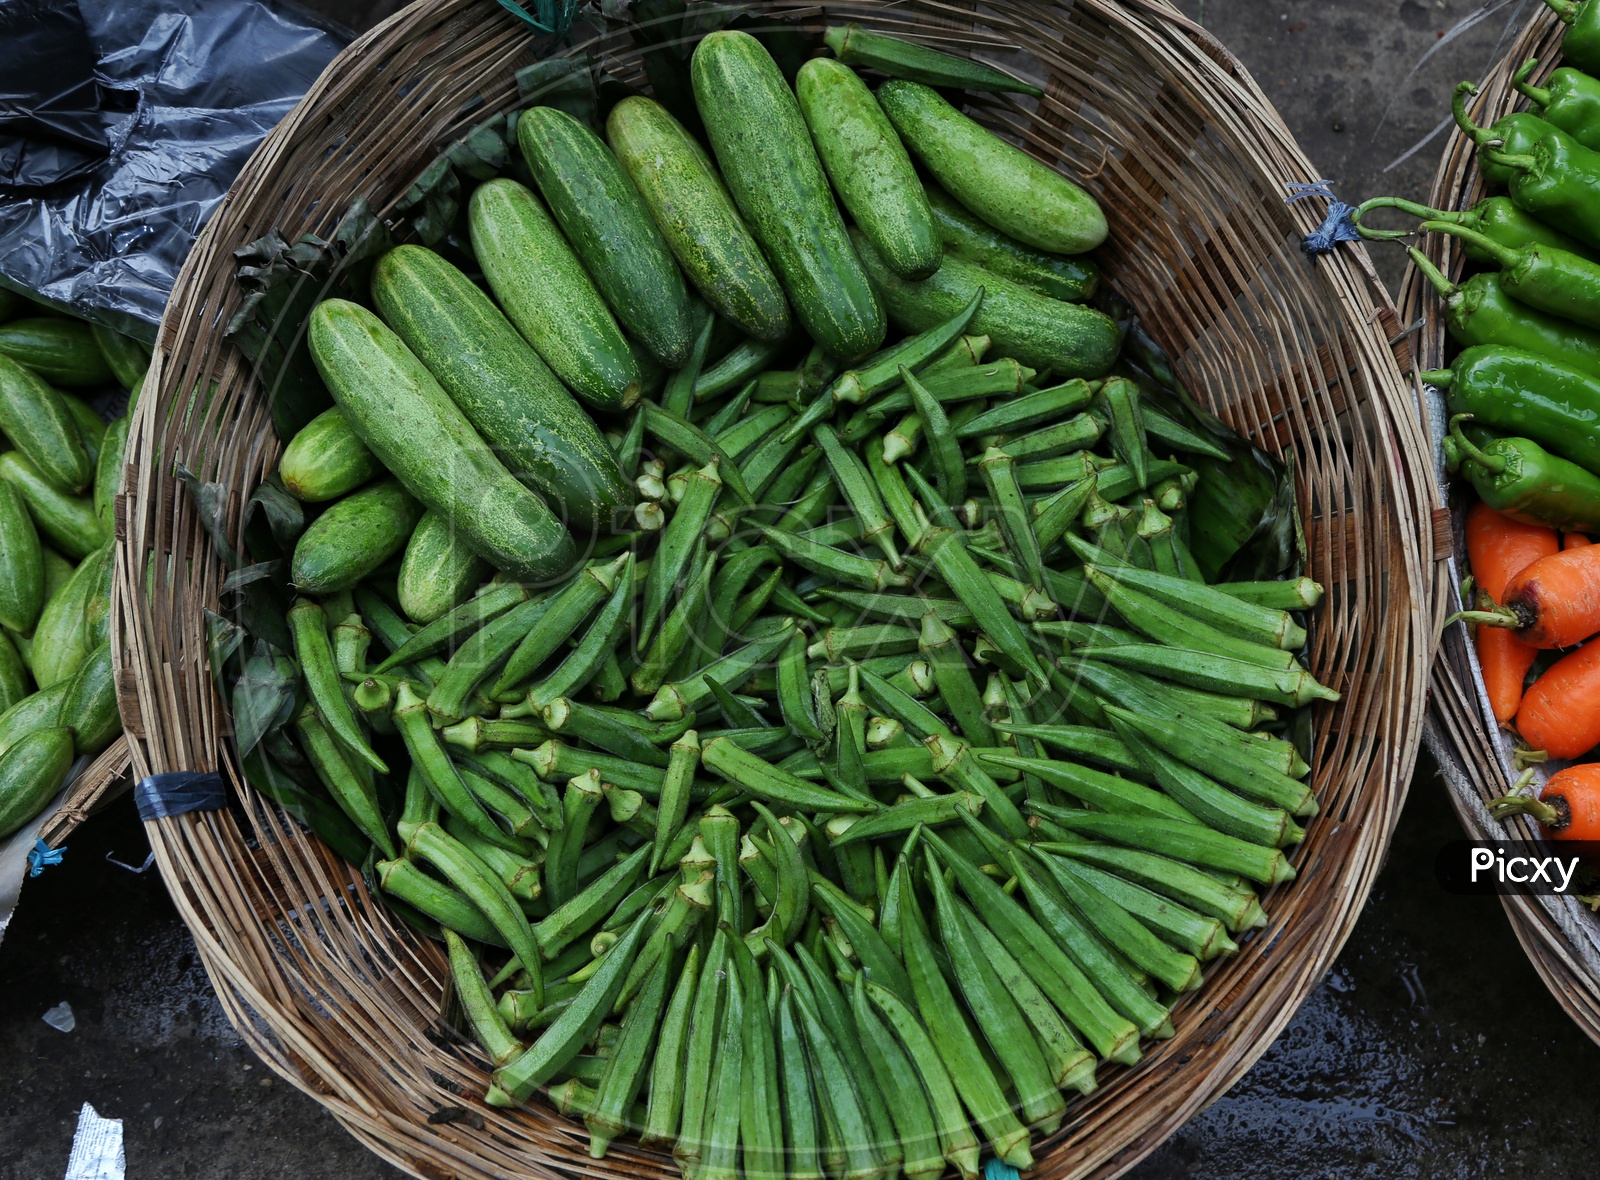 Vegetables In a Basket At a Road Side Vendor Stall